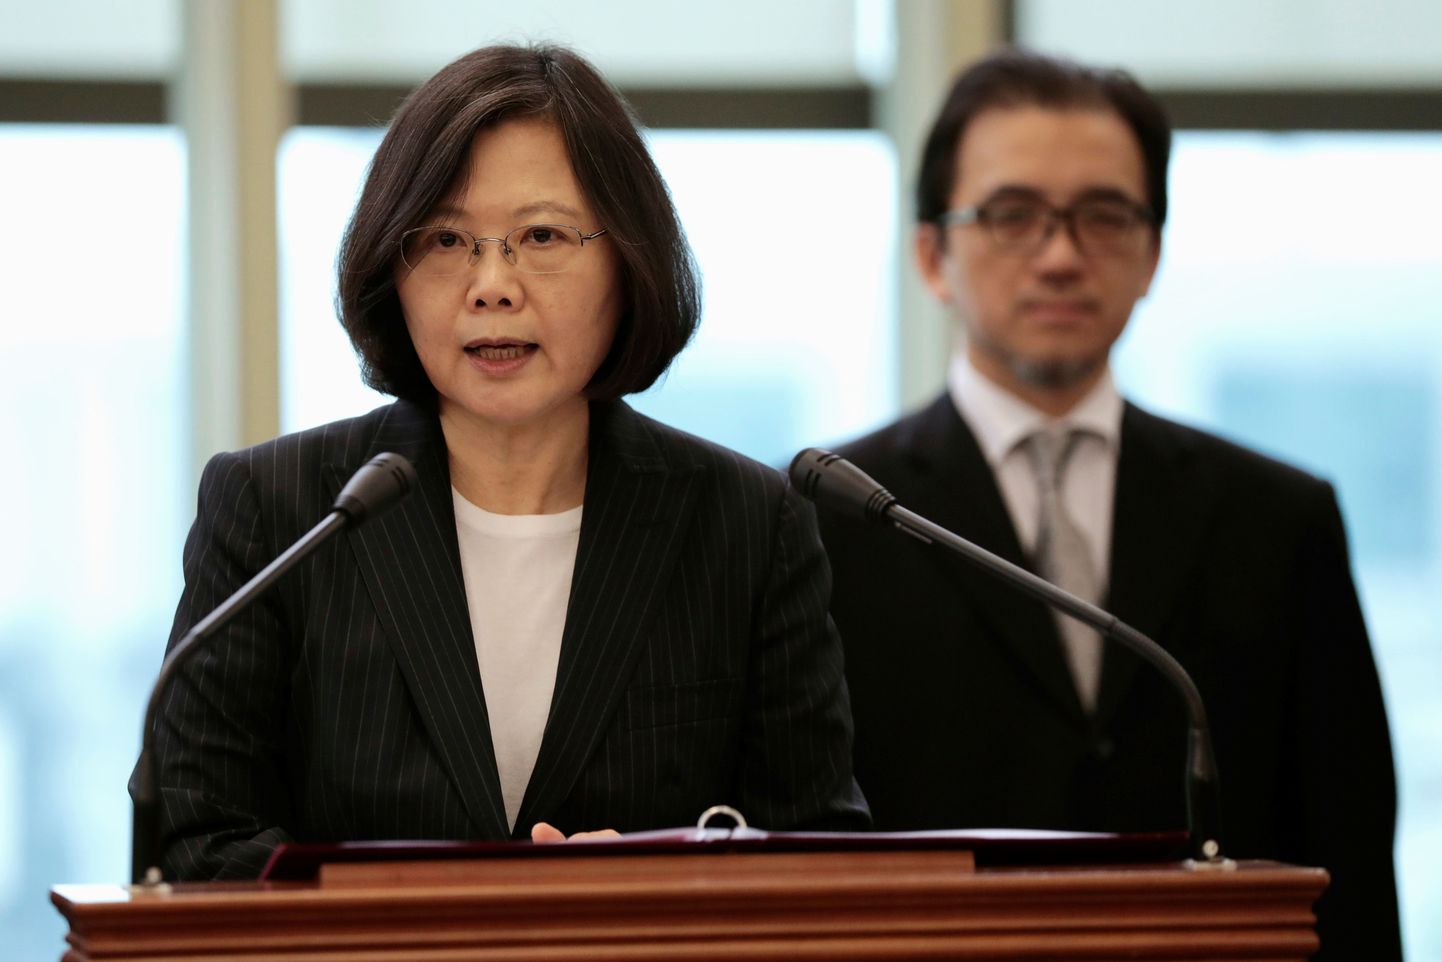 Taiwani president Tsai Ing-wen